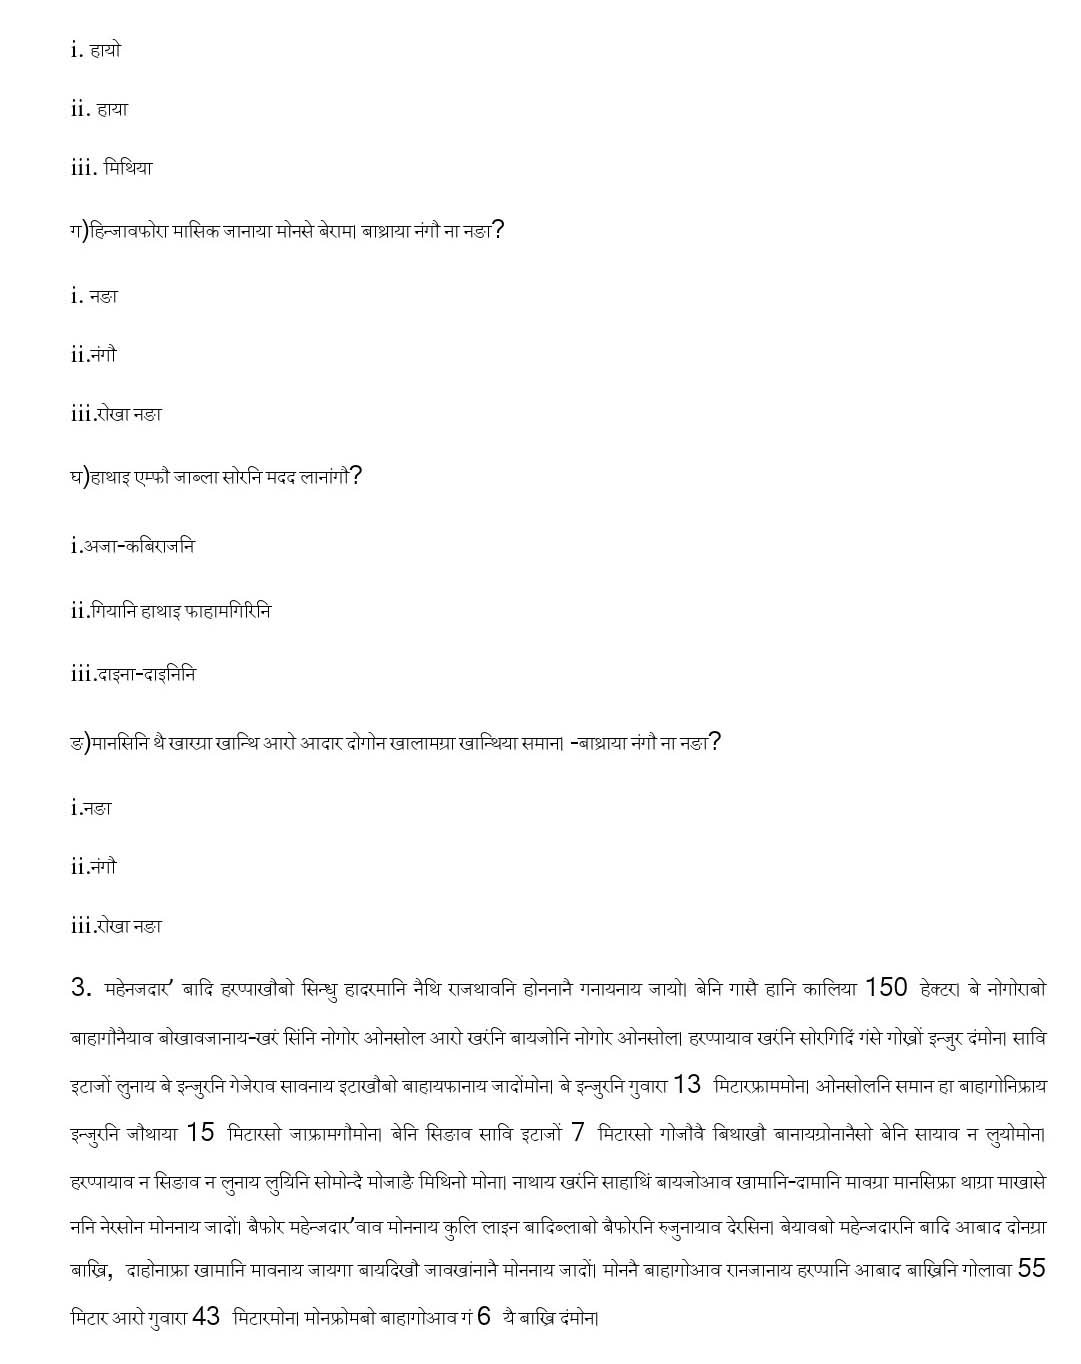 Bodo CBSE Class X Sample Question Paper 2018-19 - Image 3